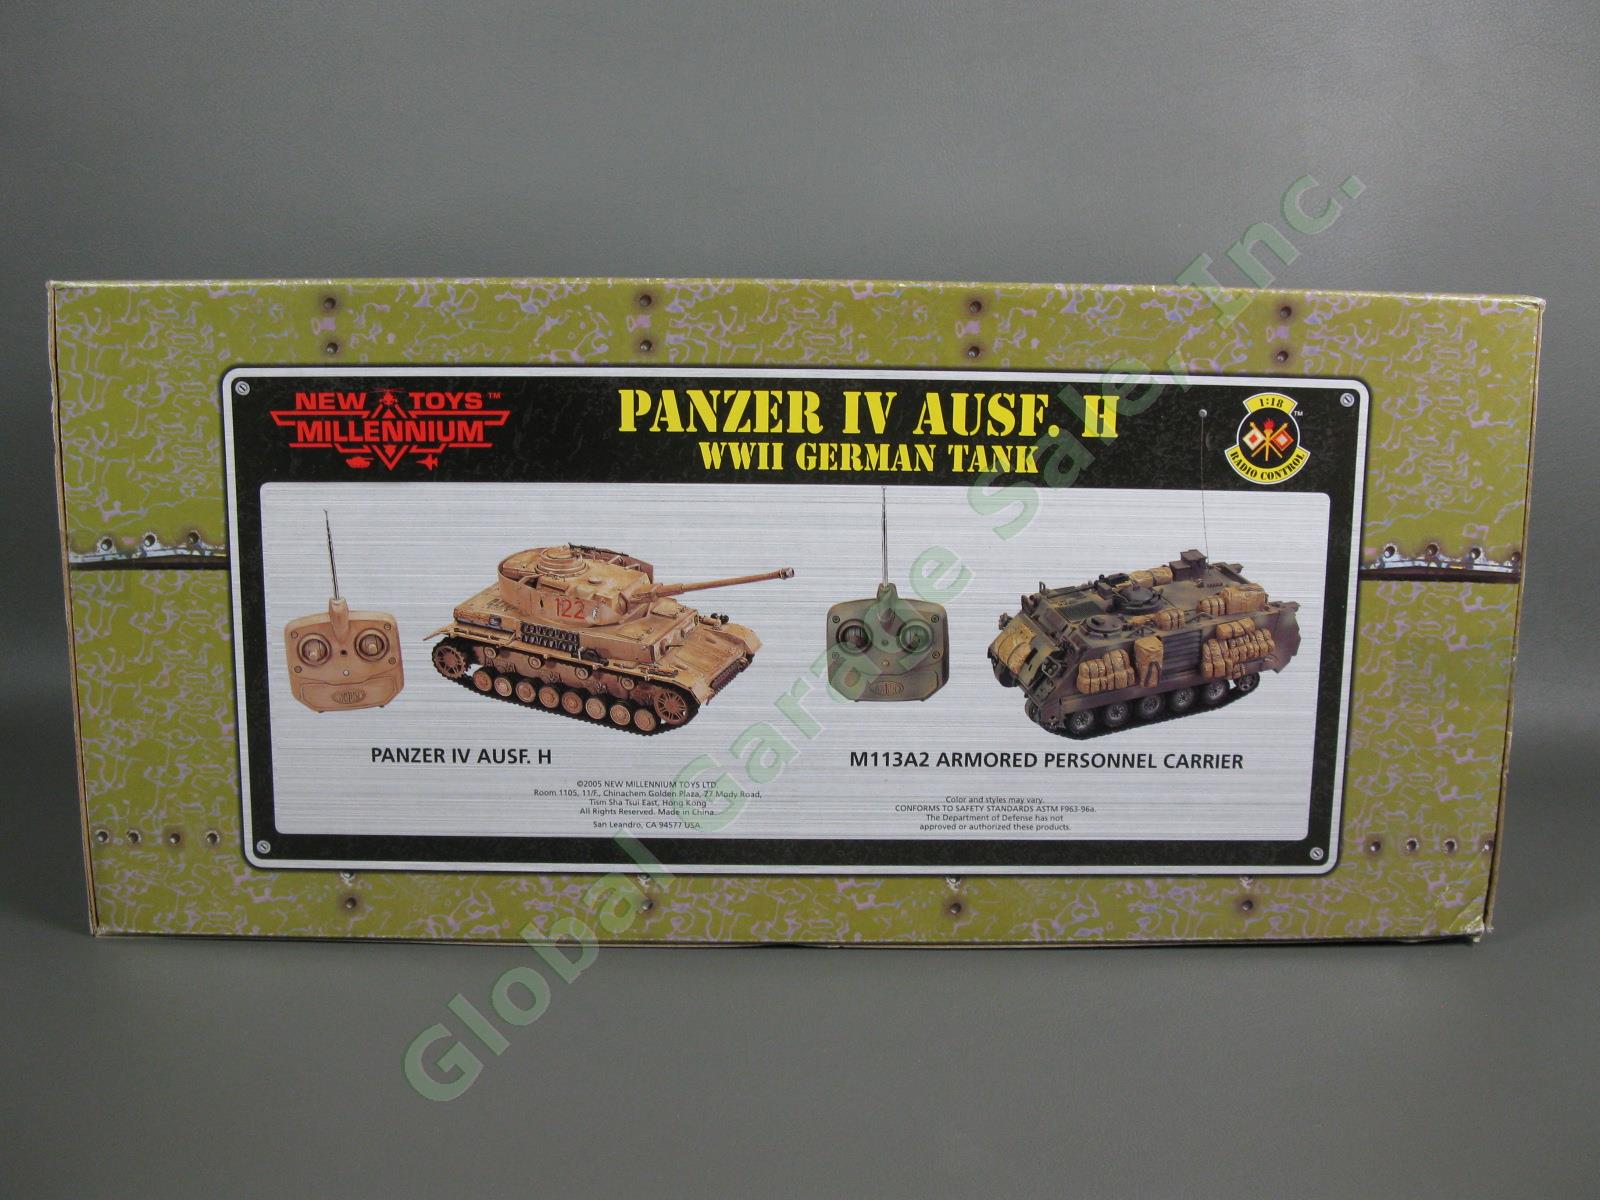 21st Century Toys Classic Armor RC 1/18 WWII German Panzer IV Ausf H Tank Gray 2